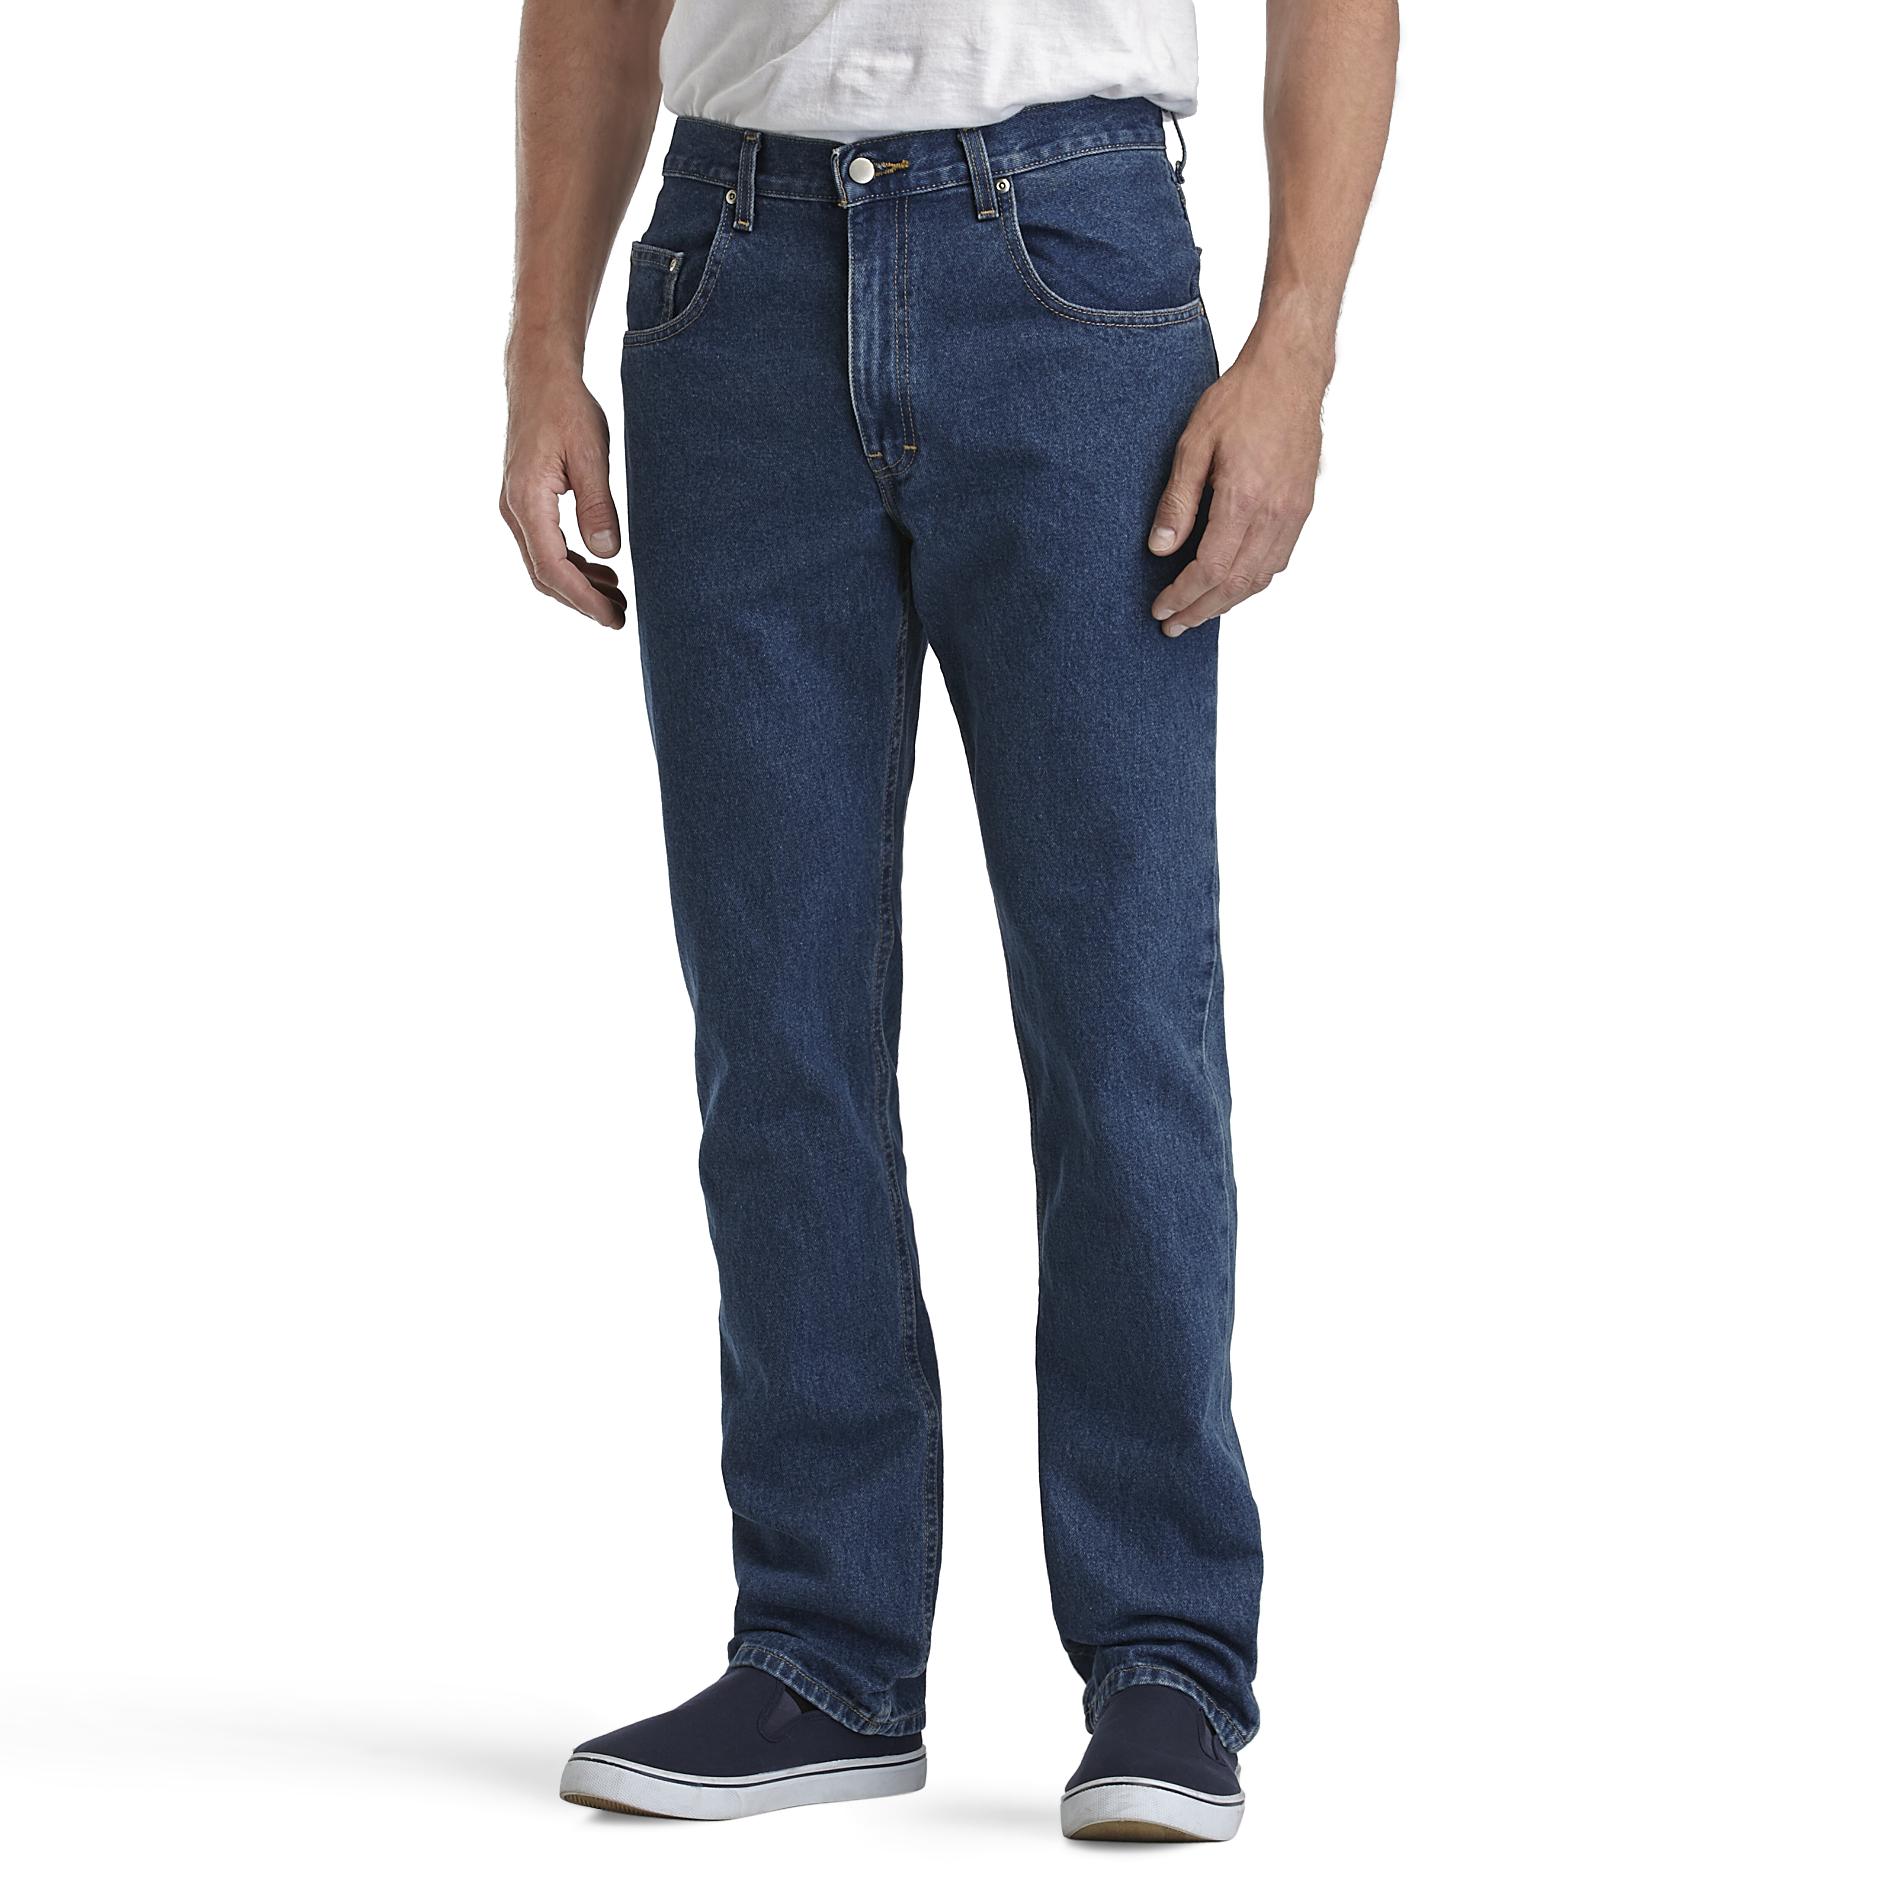 Basic Editions Men's Jeans